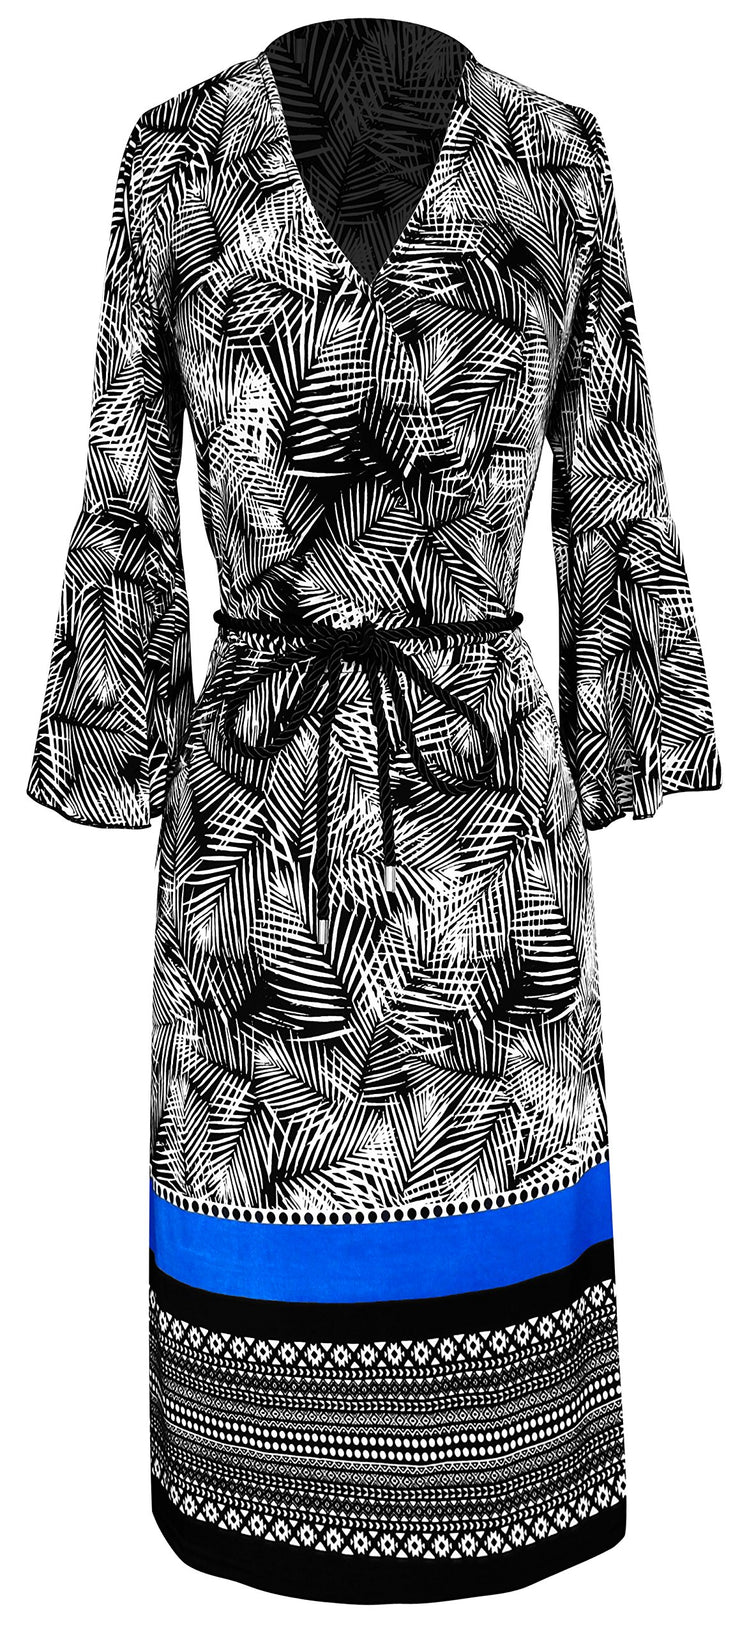 Boho Tribal Surplice Mid-Length Shift Dress with 3/4 Bell Sleeves (XL, Black & White)